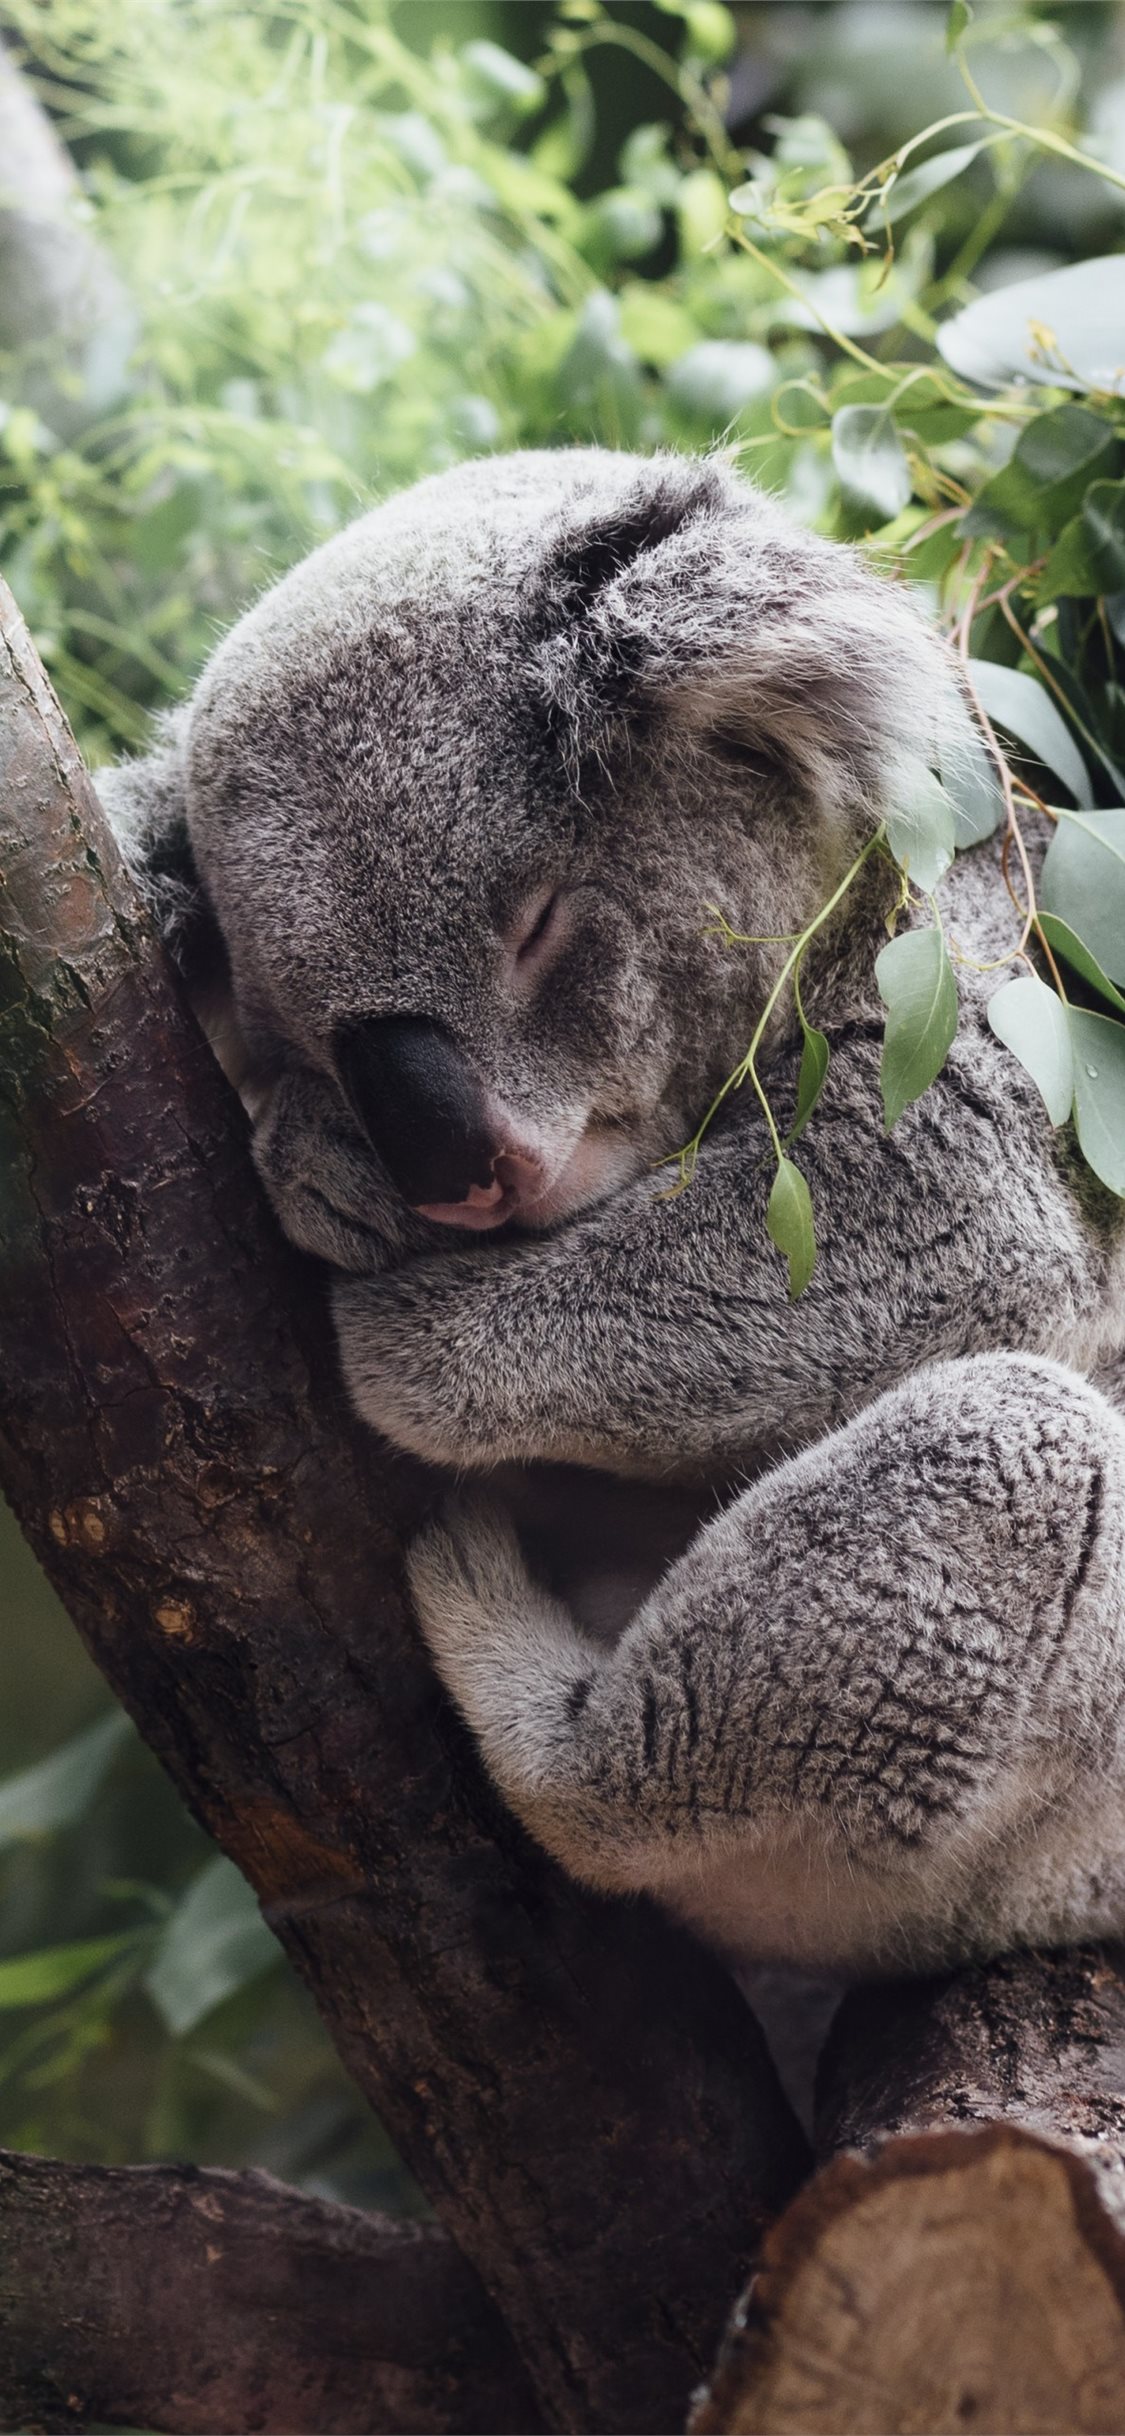 Koala Images HD Pictures For Free Vectors Download  Lovepikcom